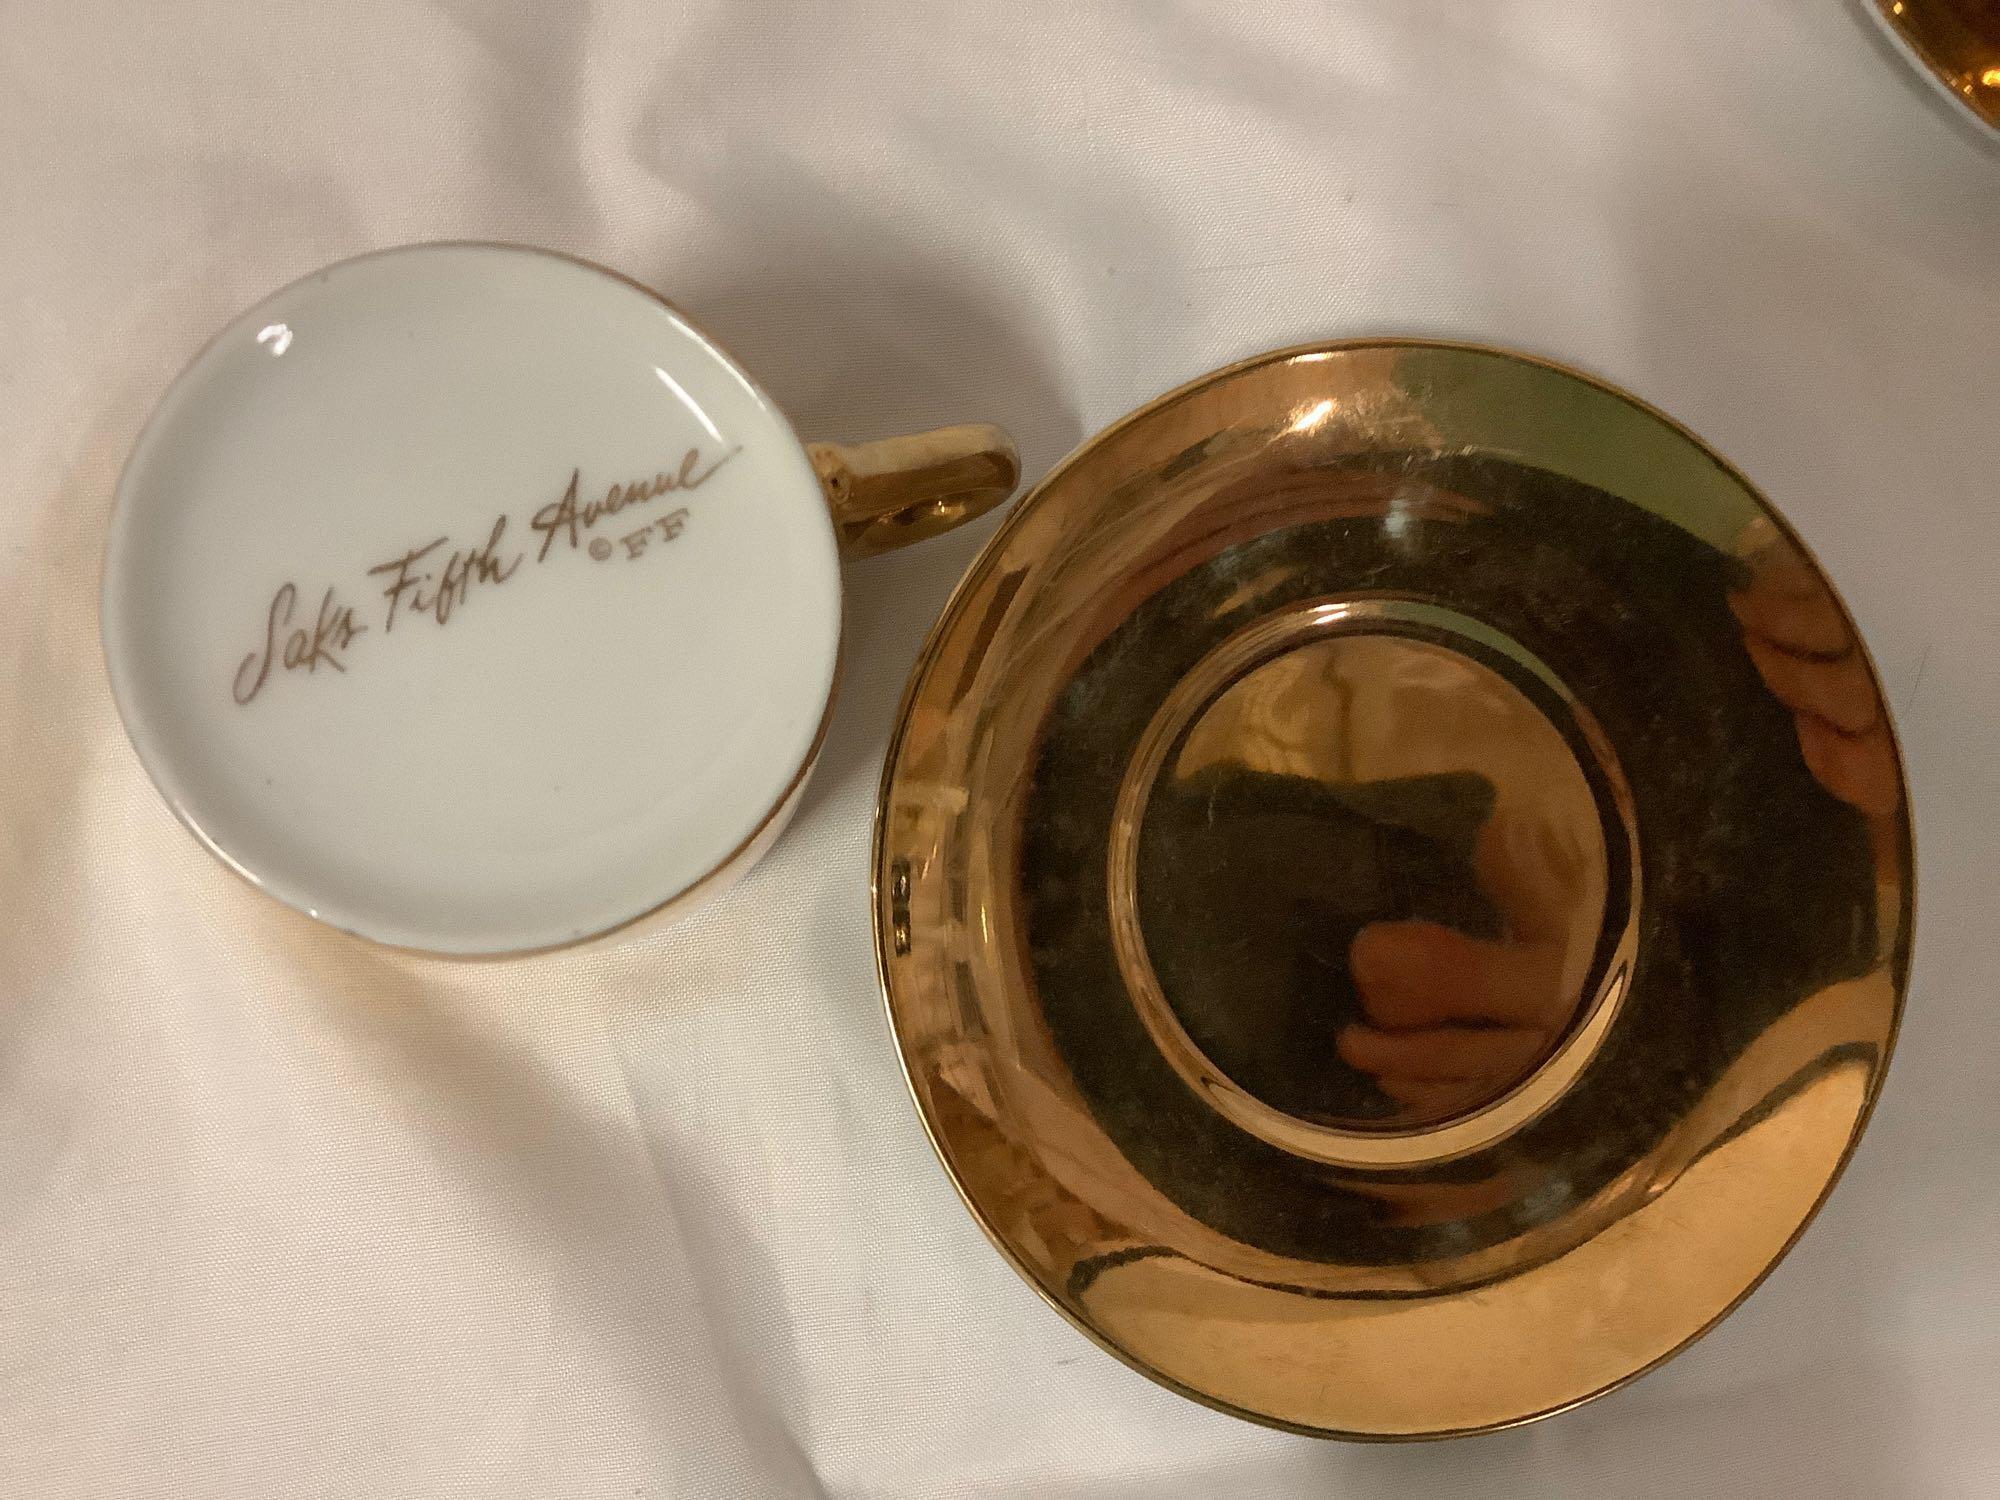 15 pc. lot of FF - Fitz & Floyd Saks Fifth Avenue gold porcelain demitasse cup & saucer sets w/